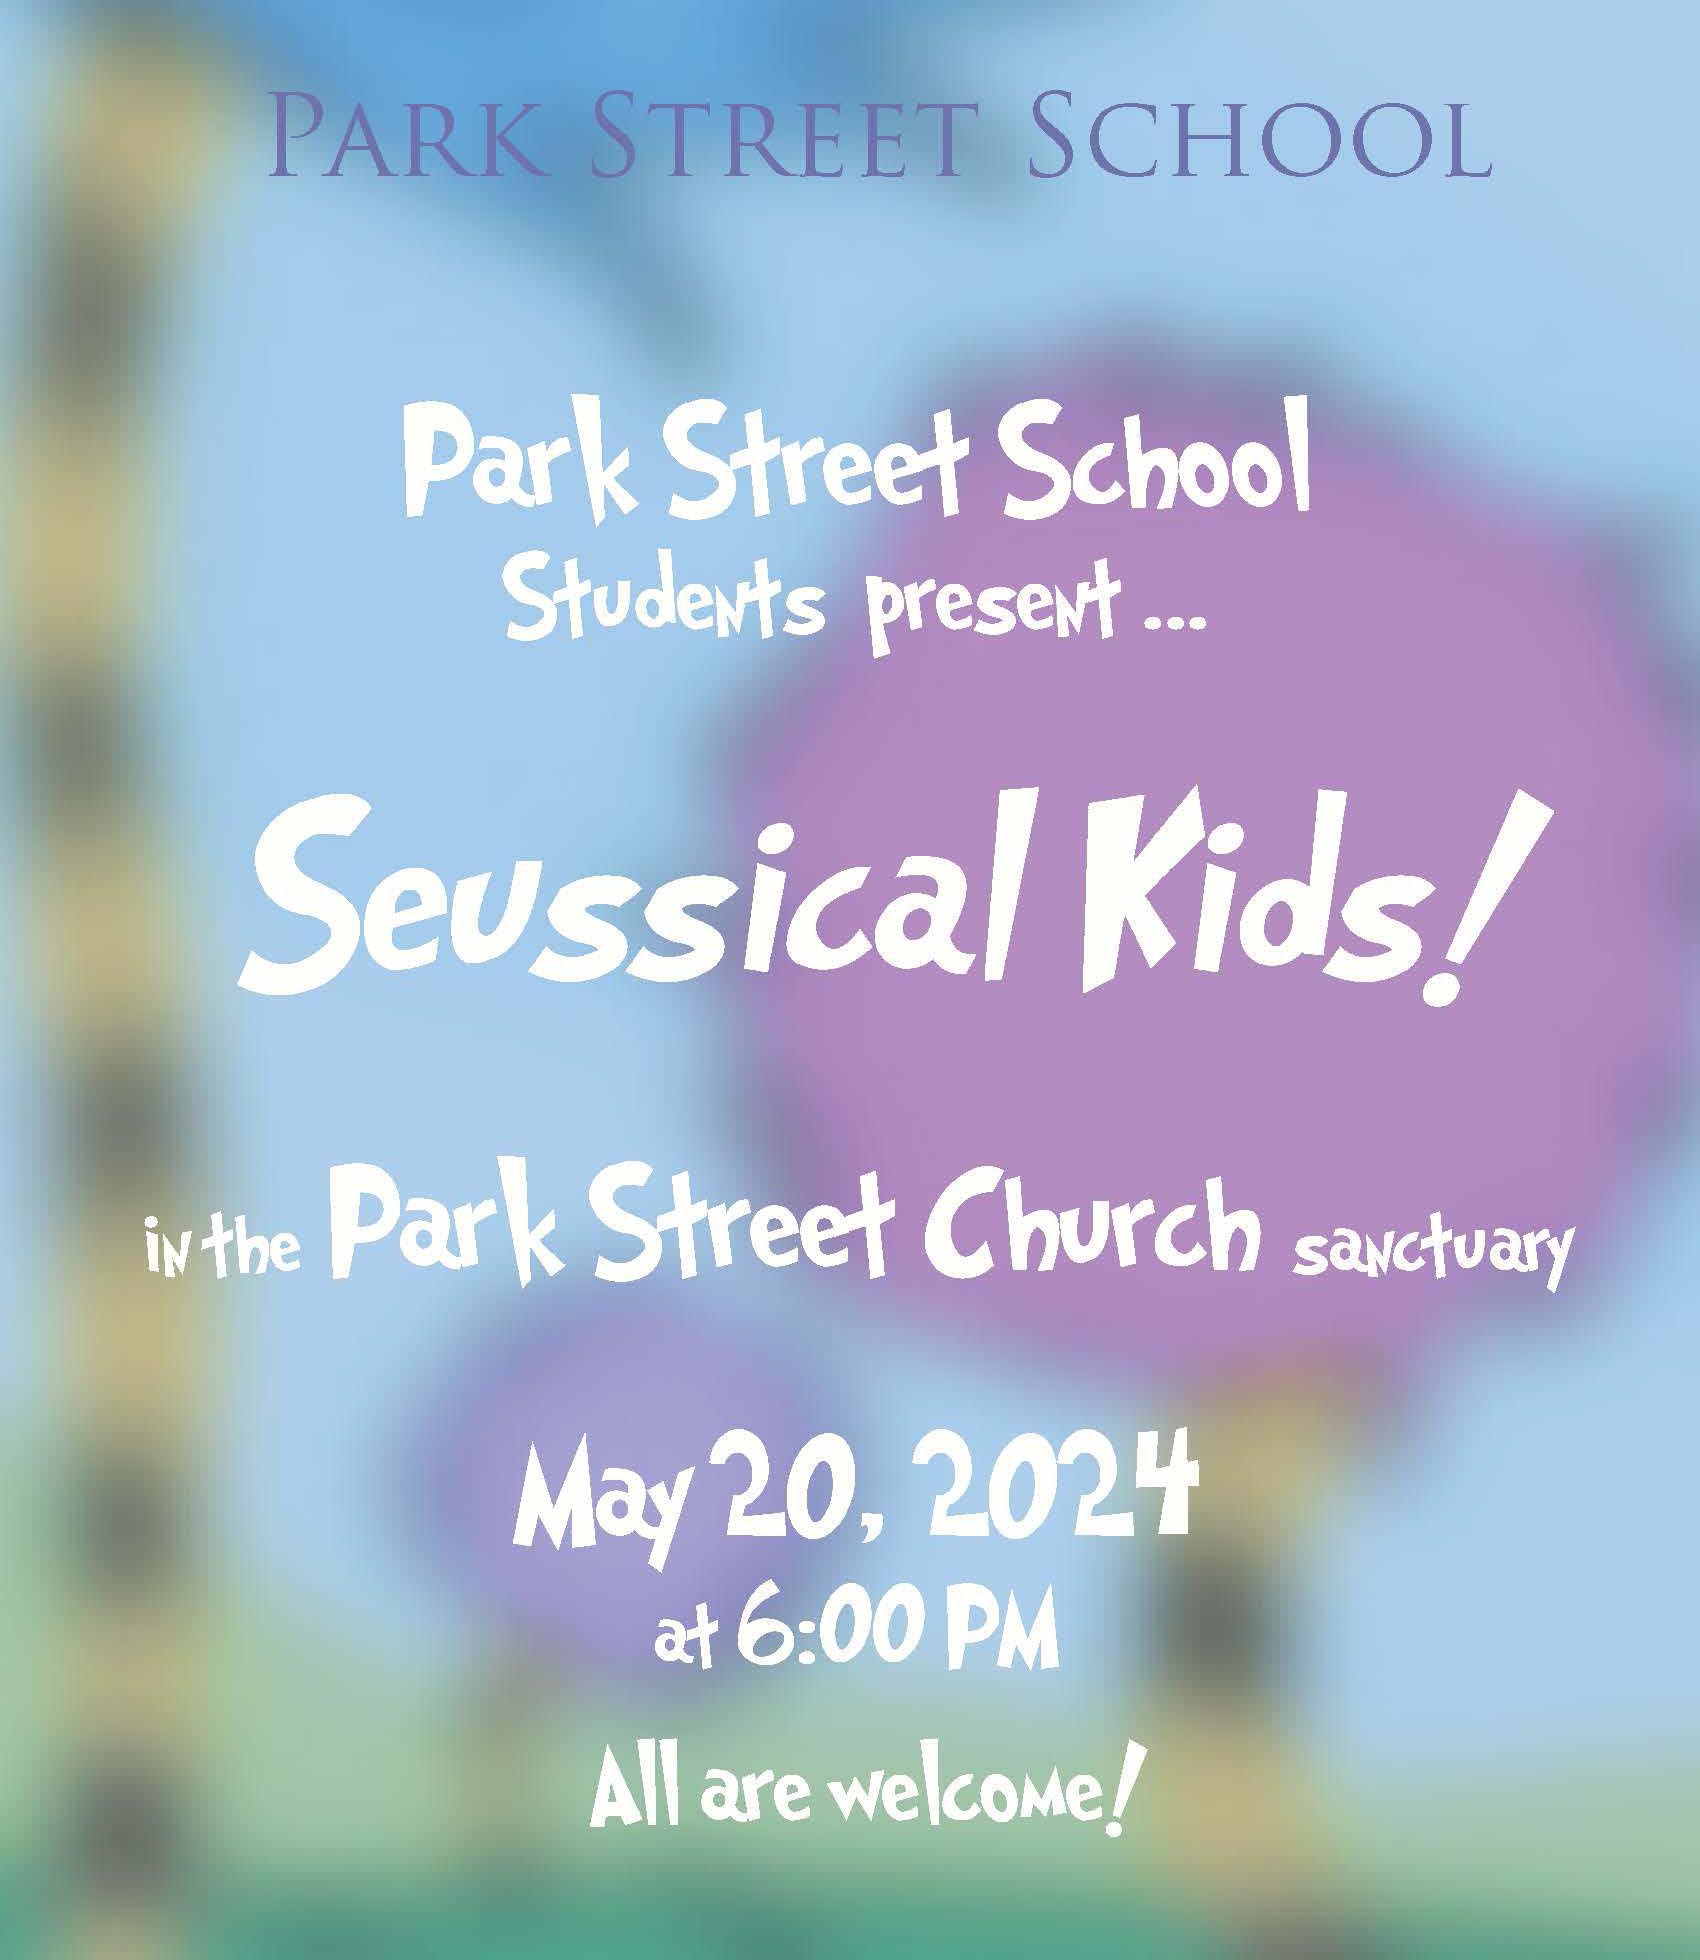 Park Street School’s Spring Concert ~ Monday, May 20